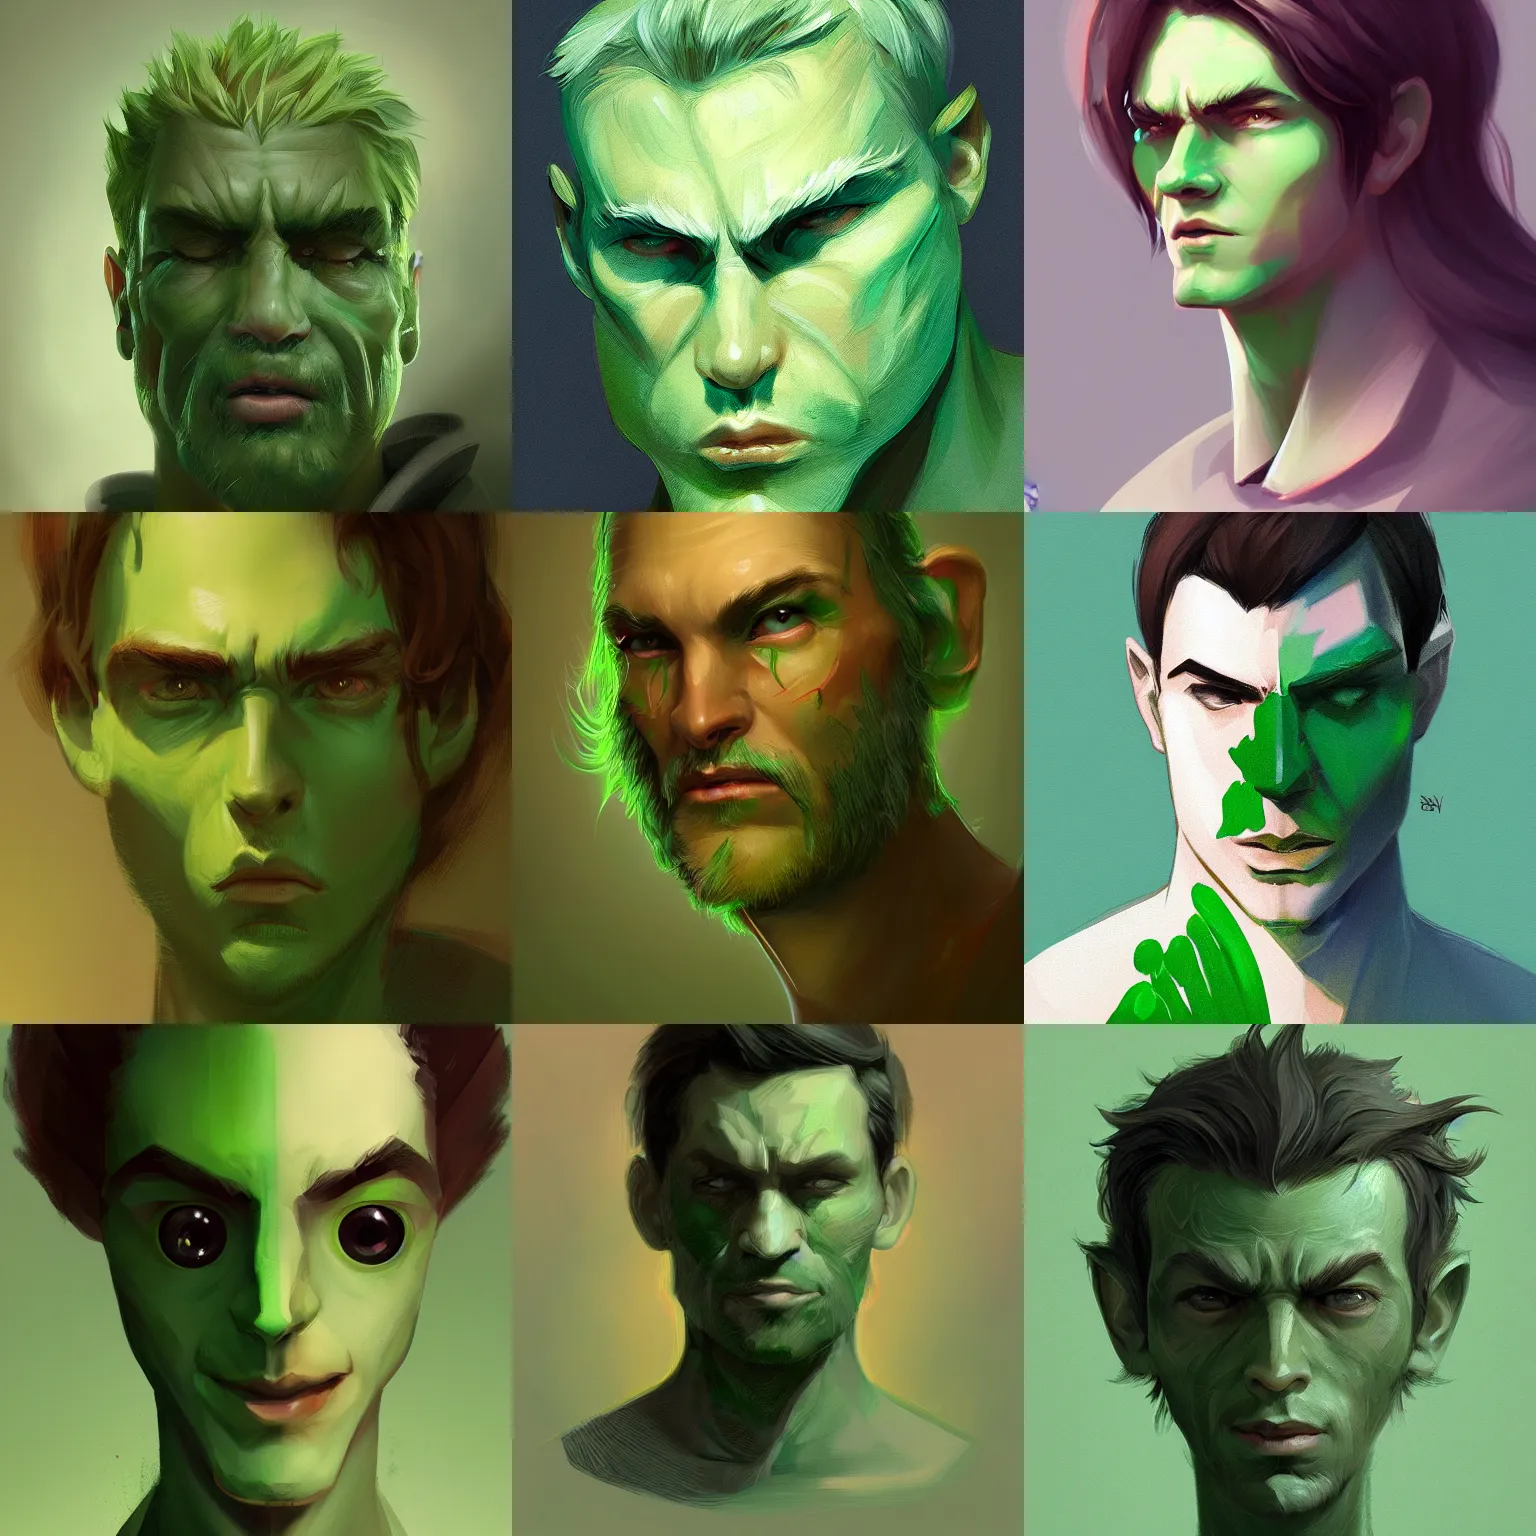 Prompt: character concept portrait, green man, digital painting, concept art, smooth, sharp focus, illustration, artist wlop